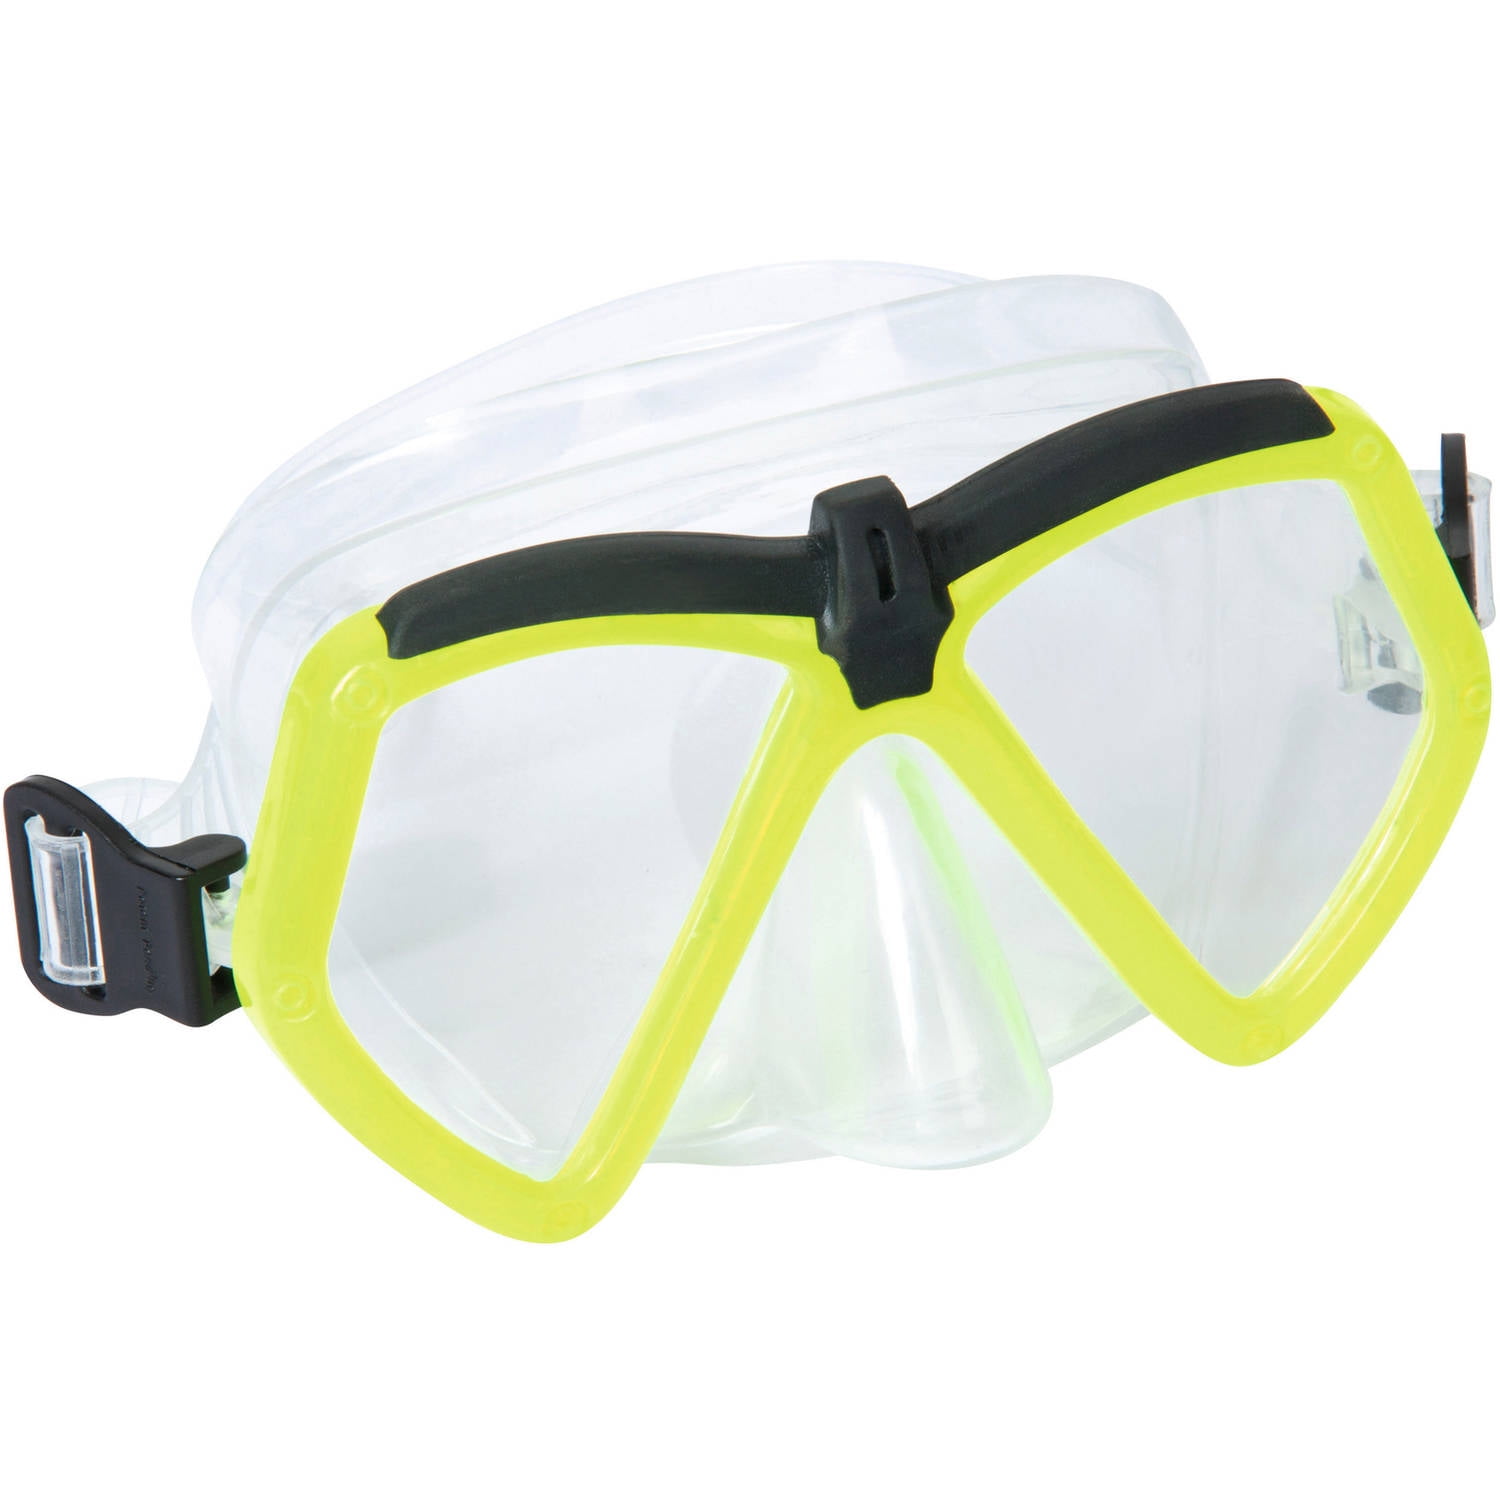 Bestway Hydro-Pro EverSea Dive Mask - Walmart.com